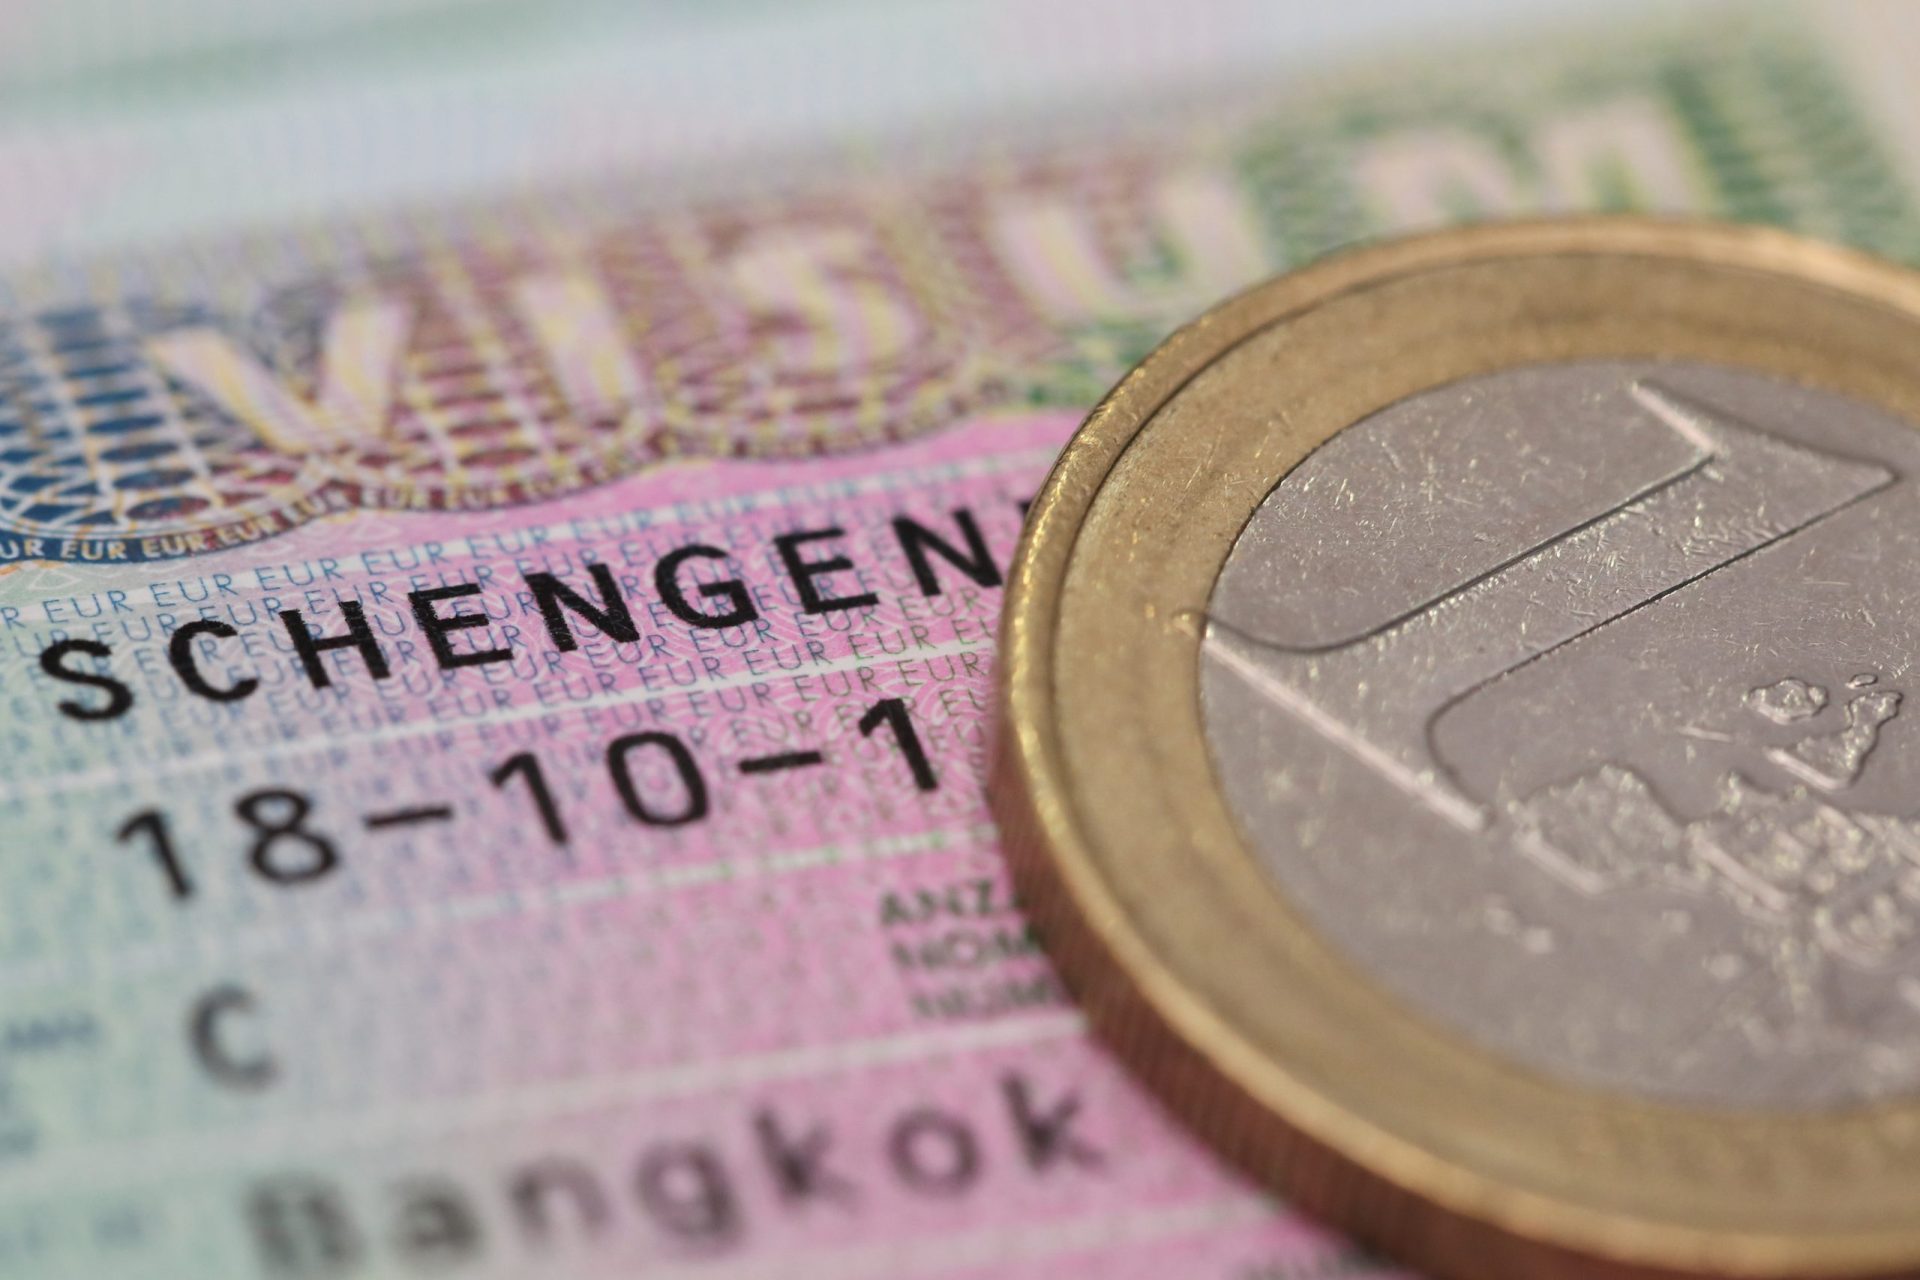 Fronteiras fechadas, Schengen em risco